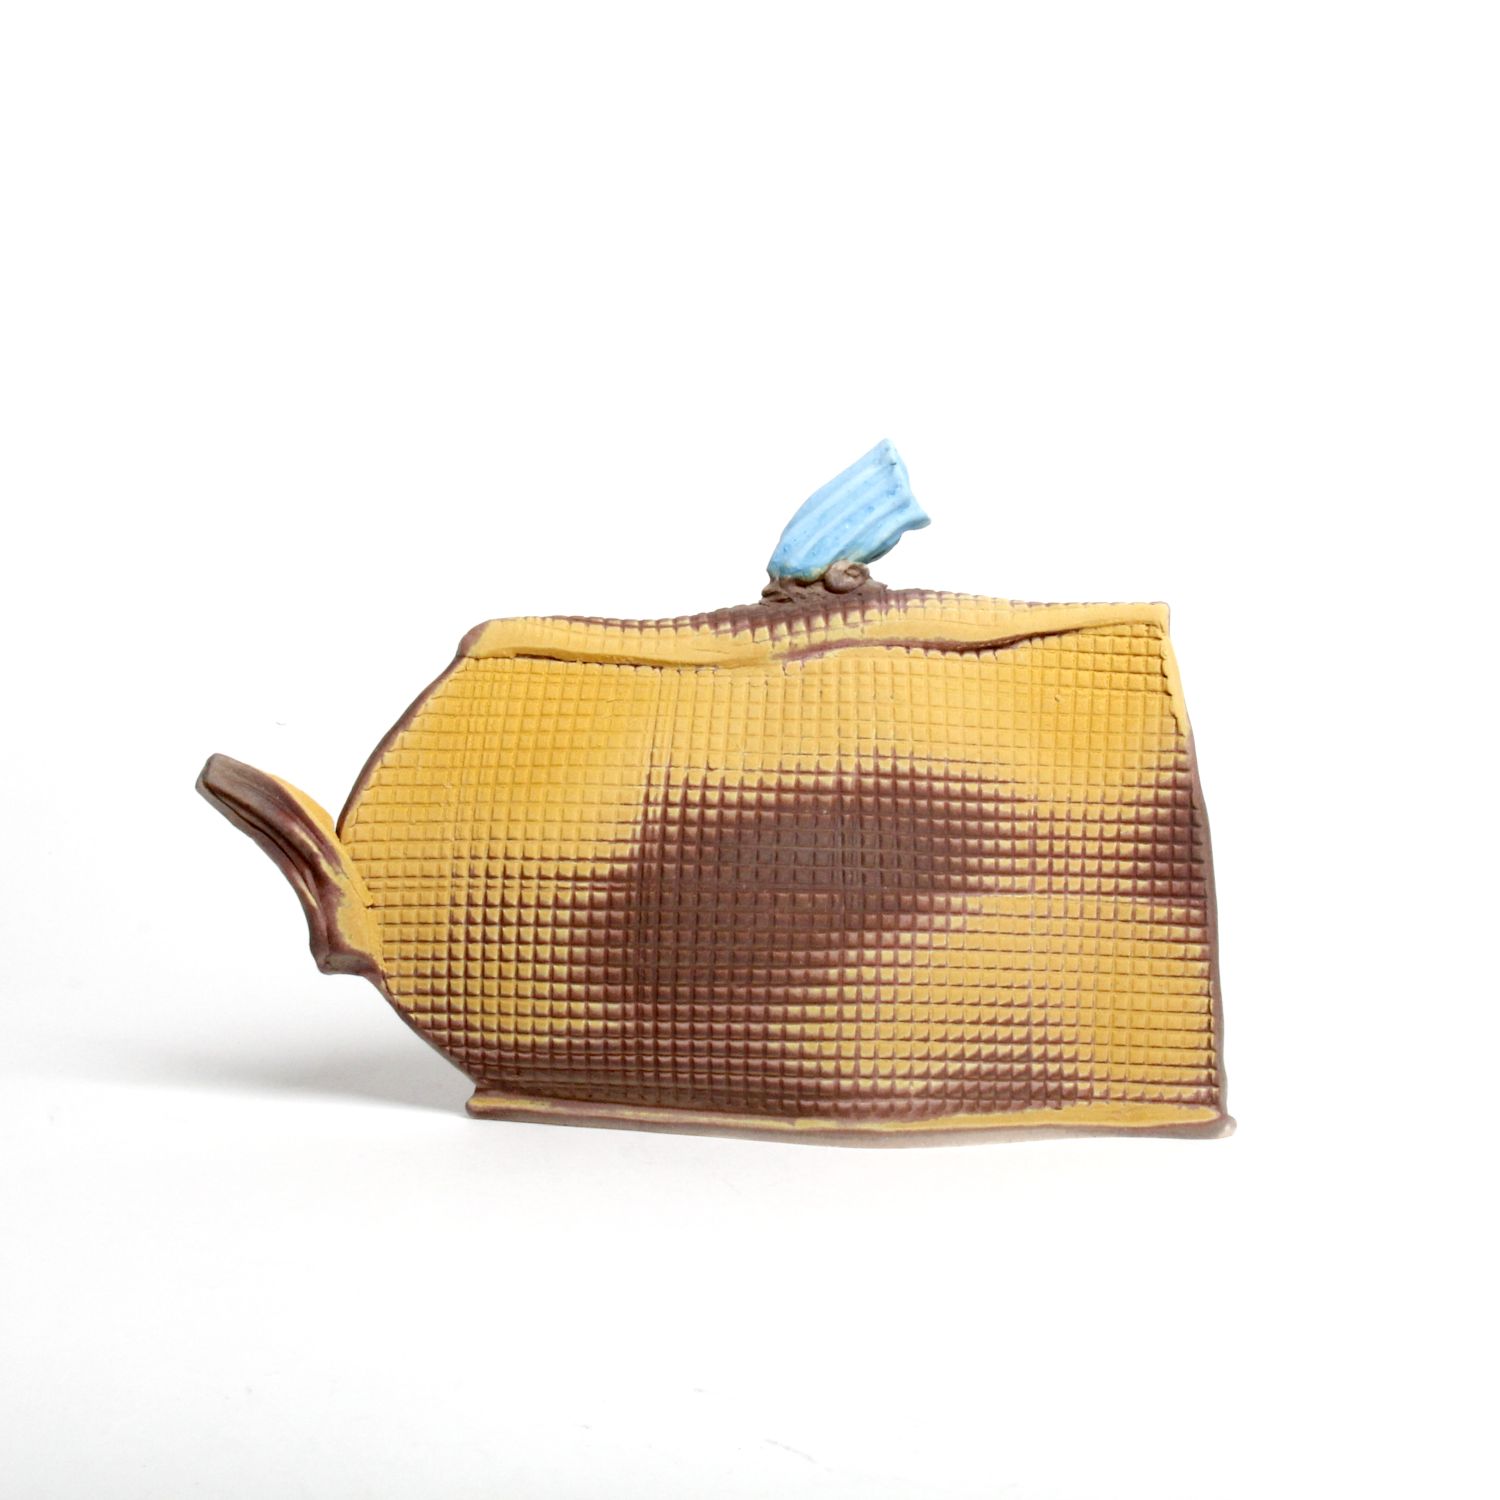 Shu-Chen Cheng: Yellow Flat Teapot Sculpture Product Image 1 of 2